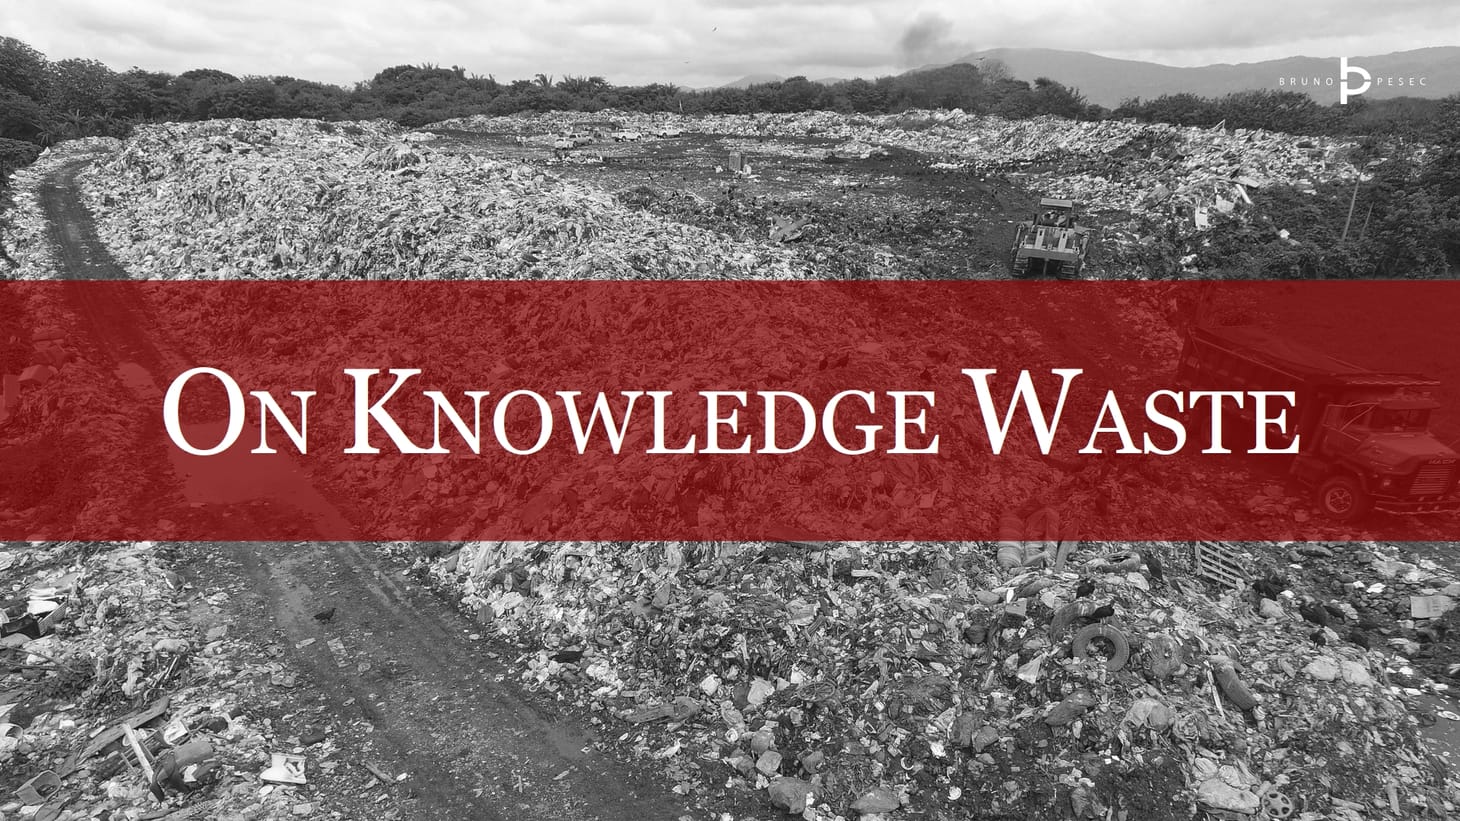 On knowledge waste